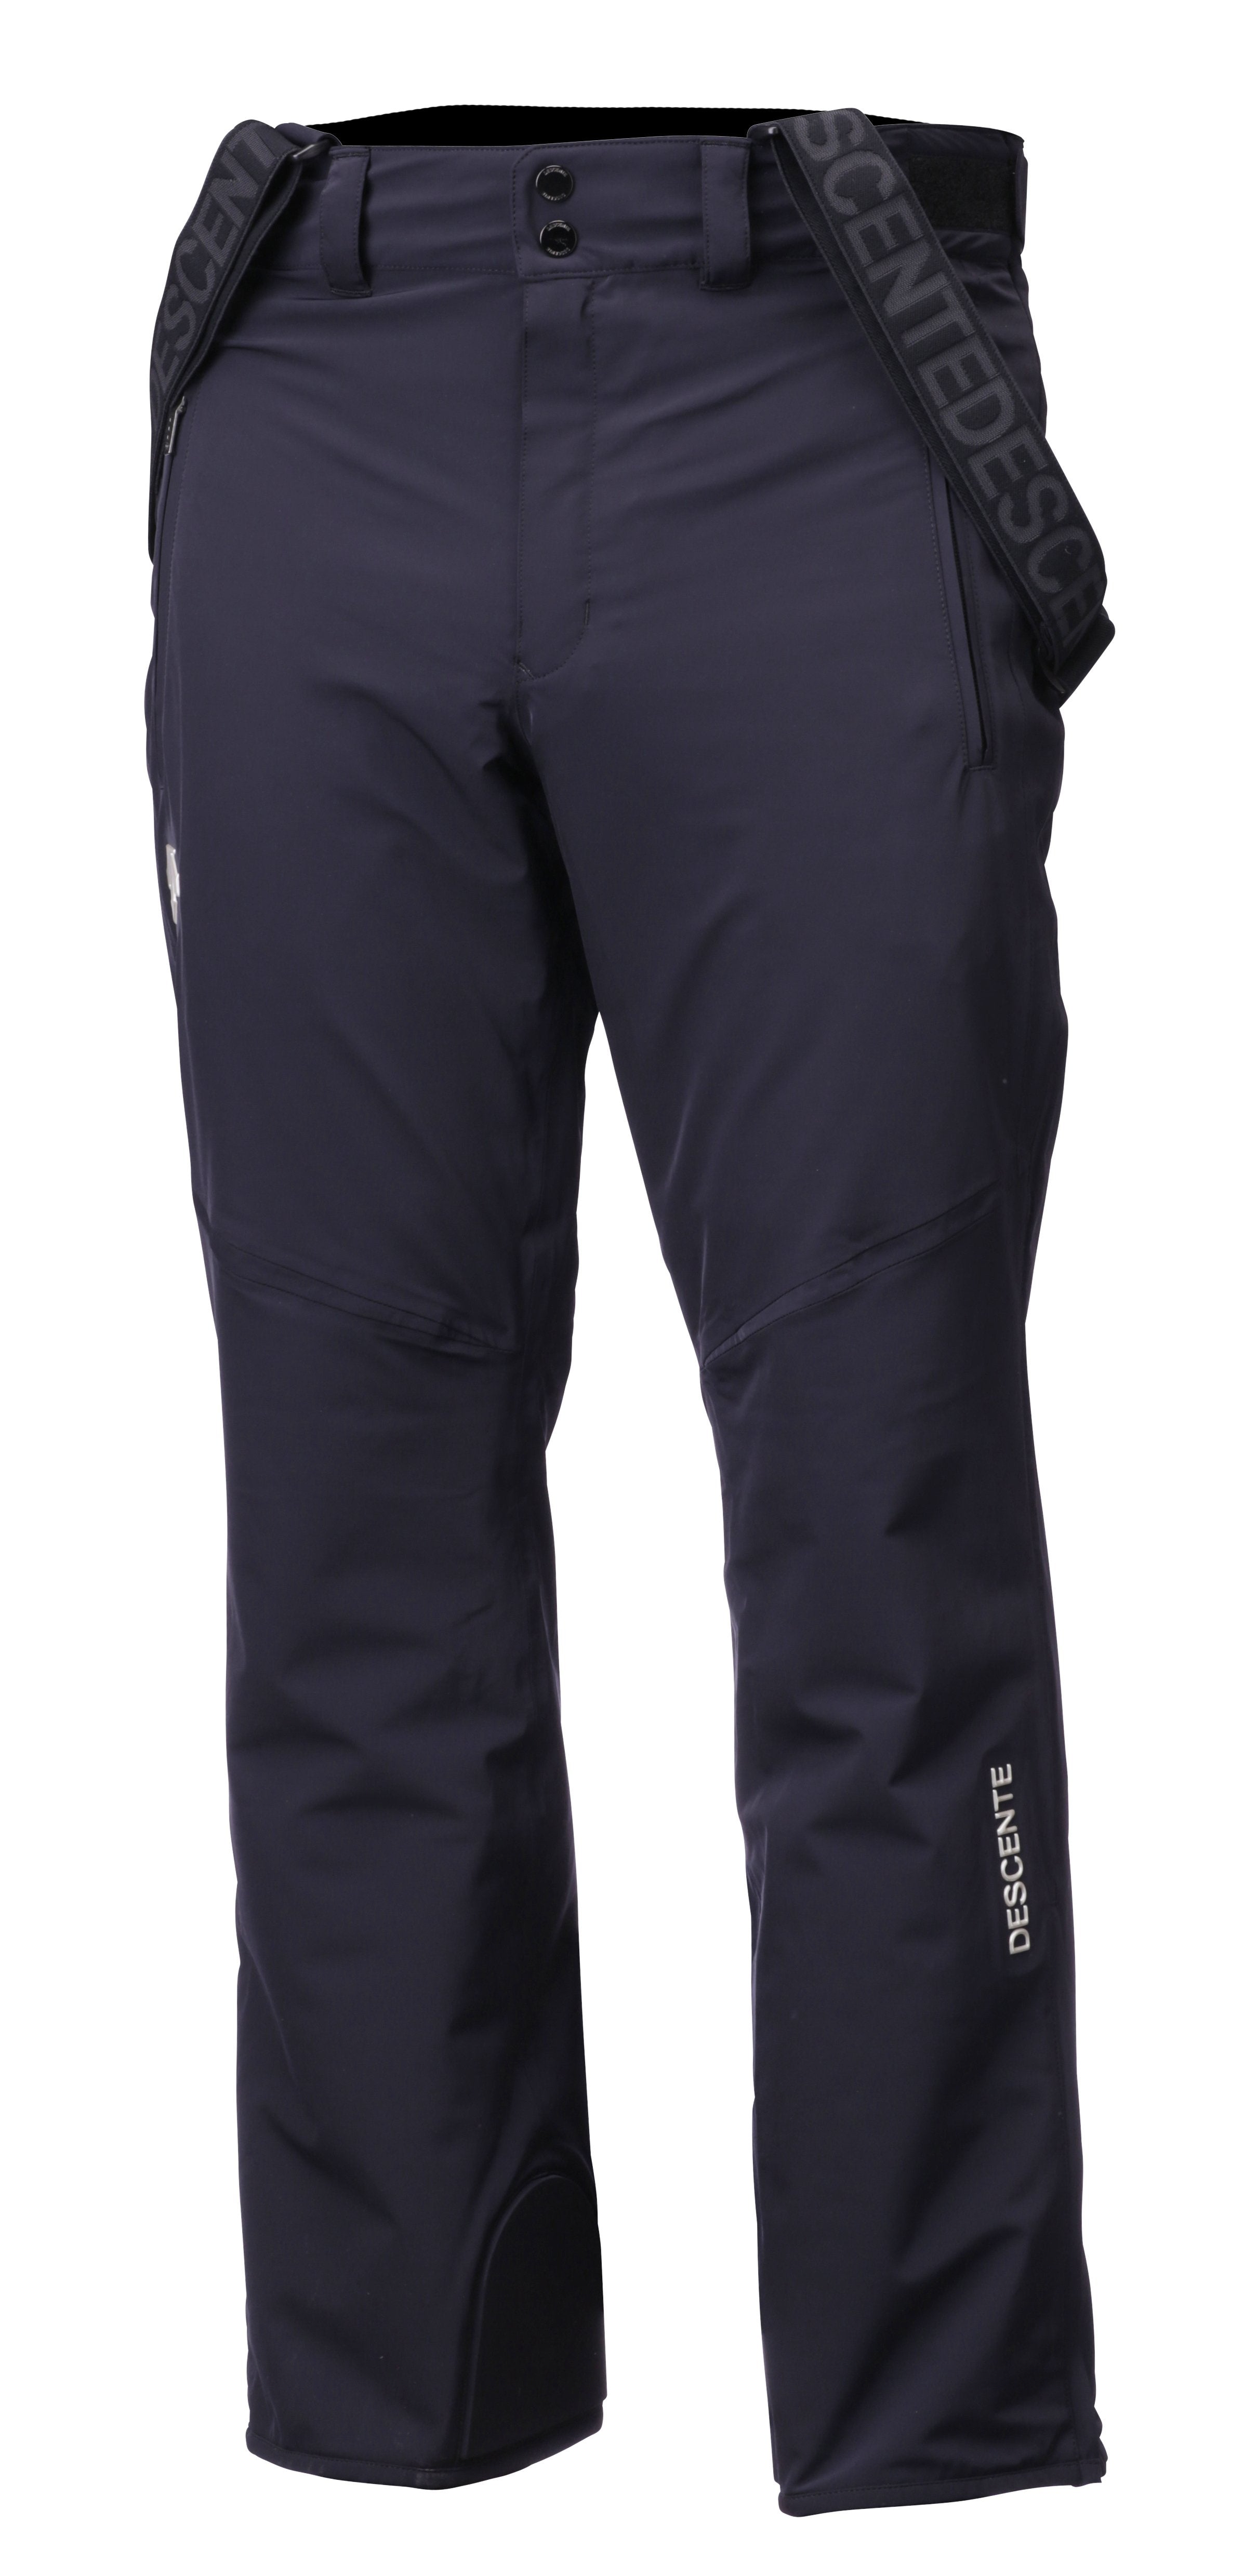 Descente Swiss Insulated Ski Pant (Men's) 